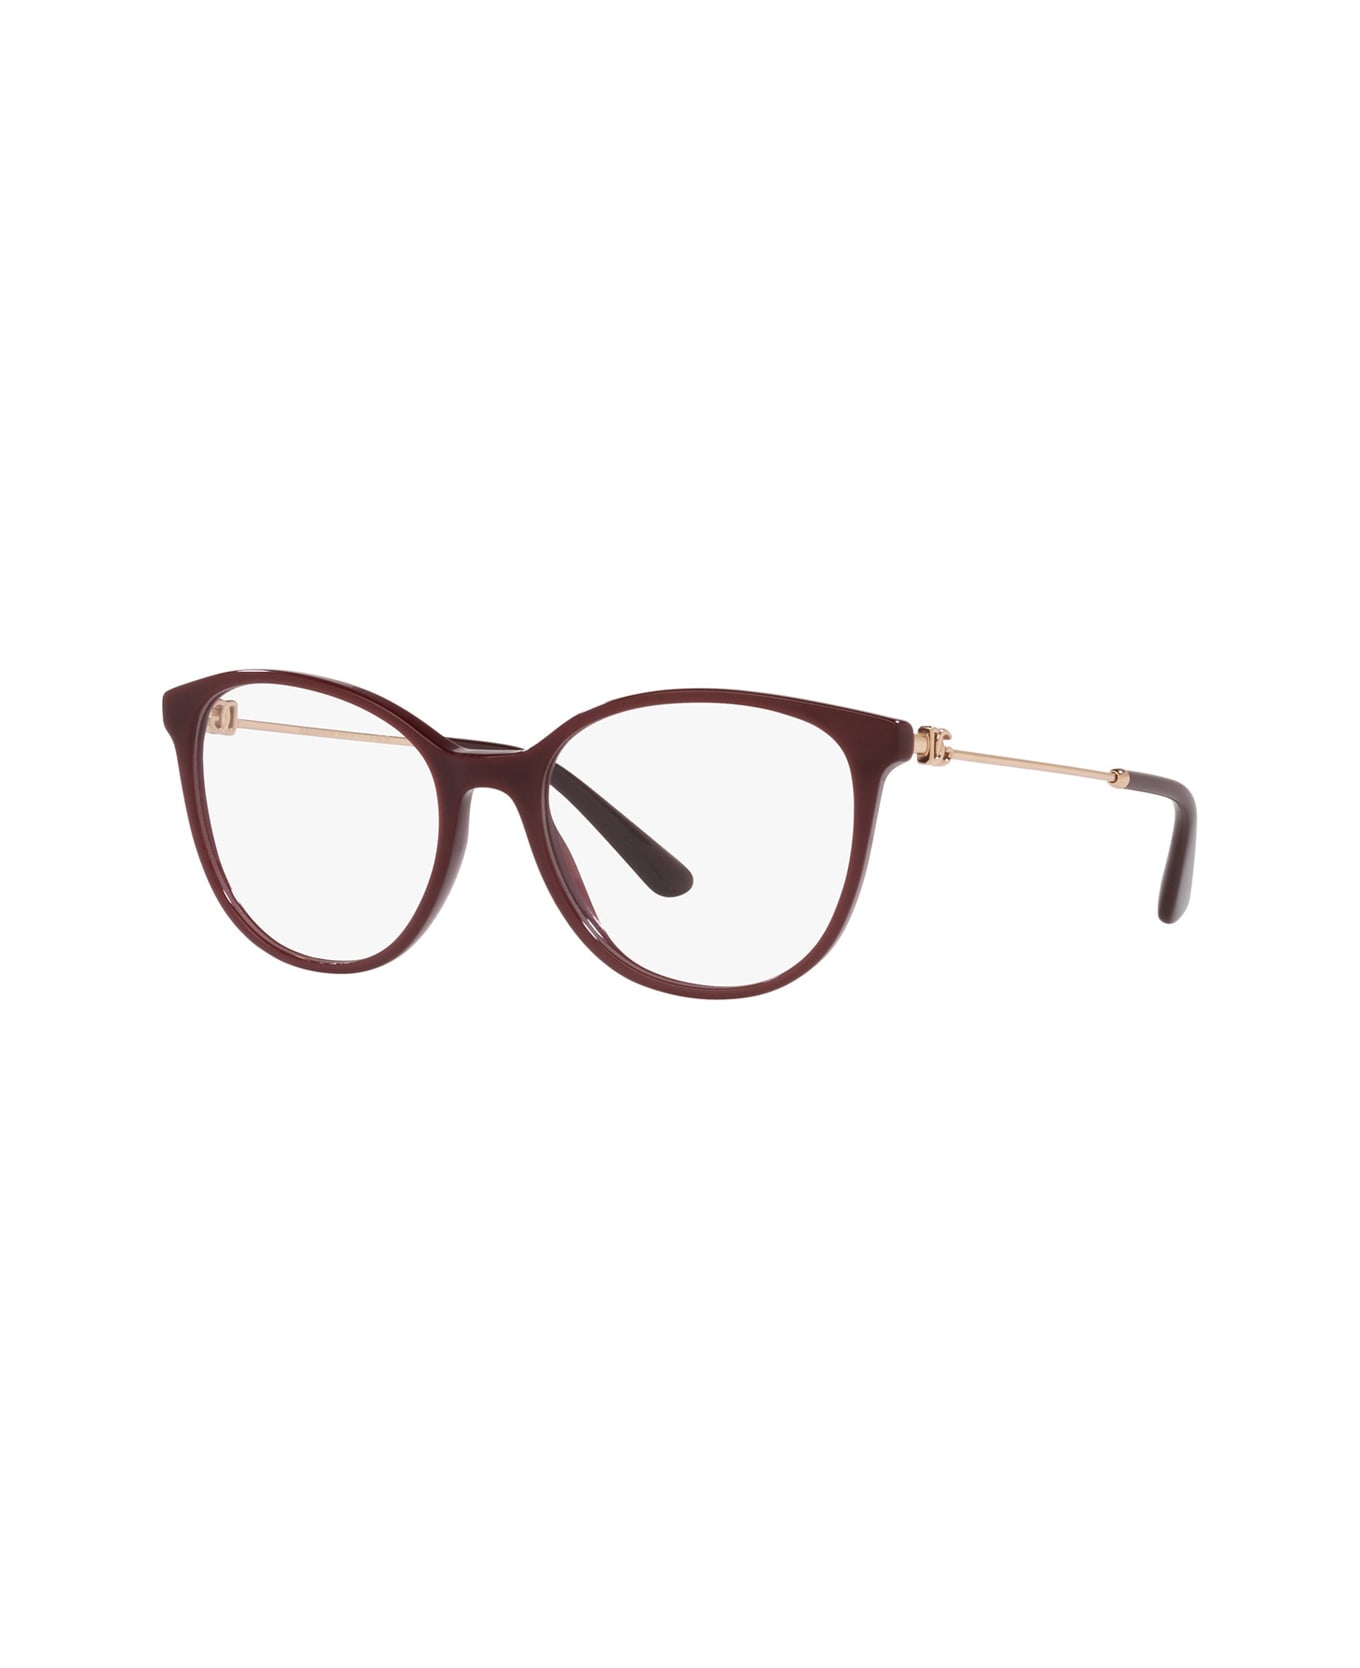 Dolce & Gabbana Eyewear Dg3363 3091 Glasses - Rosso アイウェア